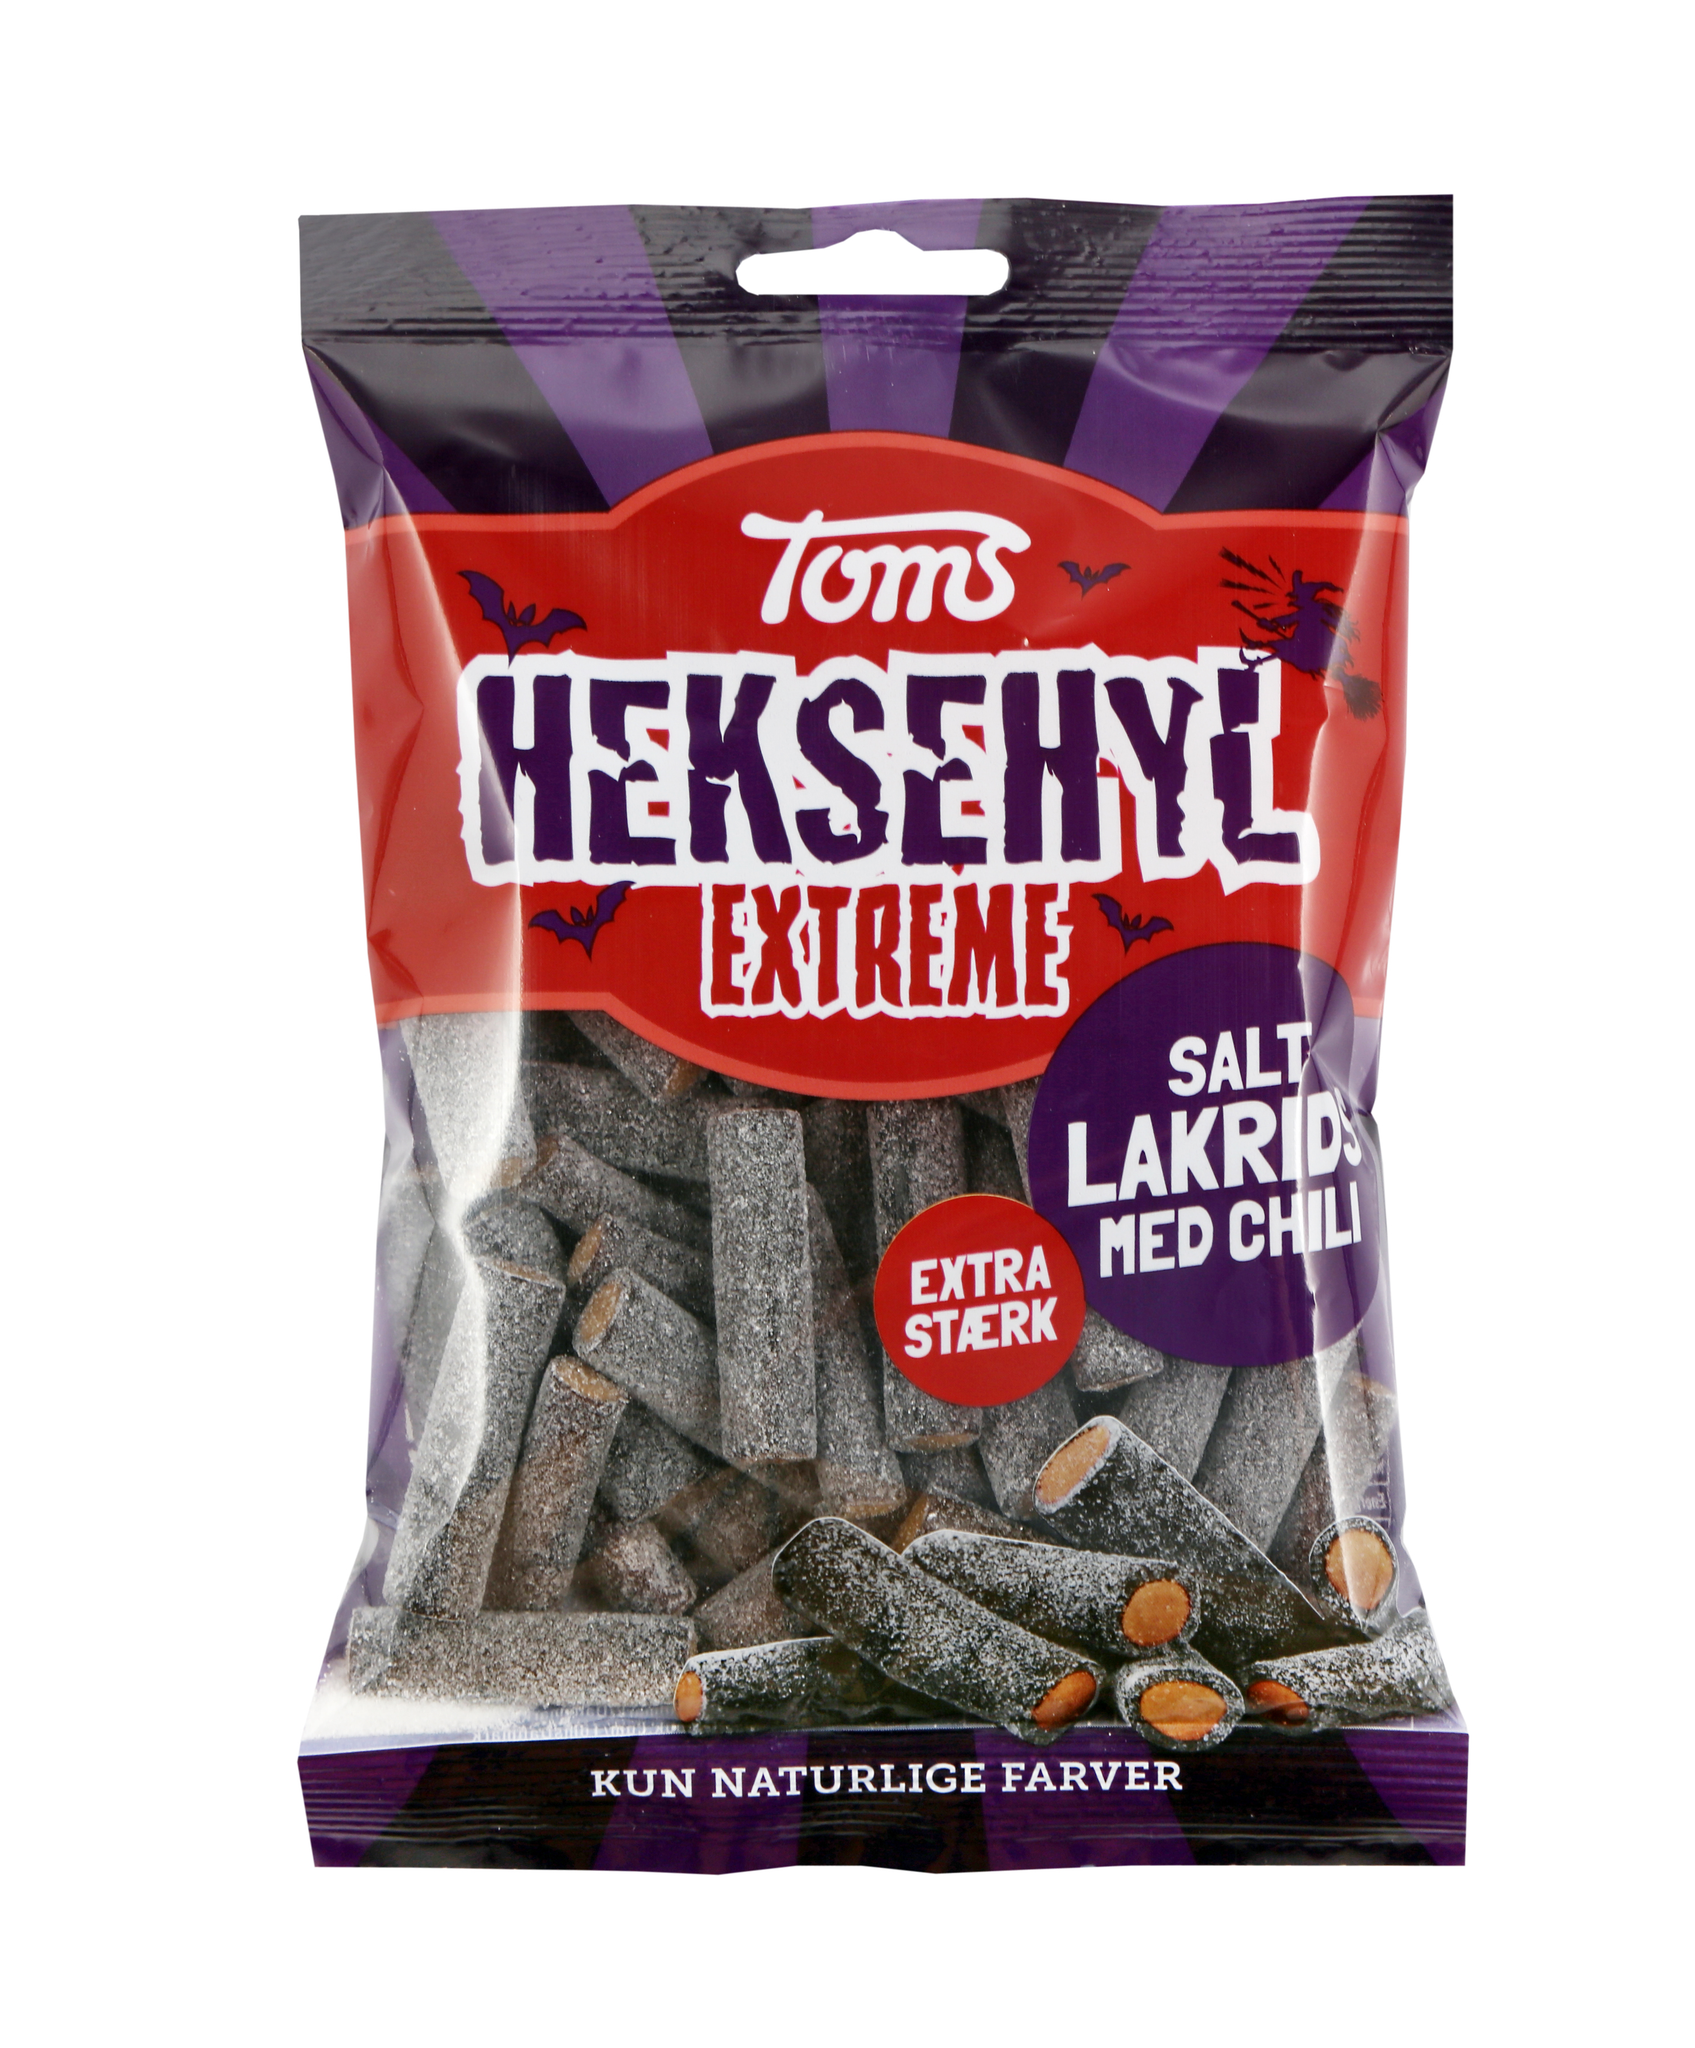 Heksehyl Extreme - Salty liquorice with chili